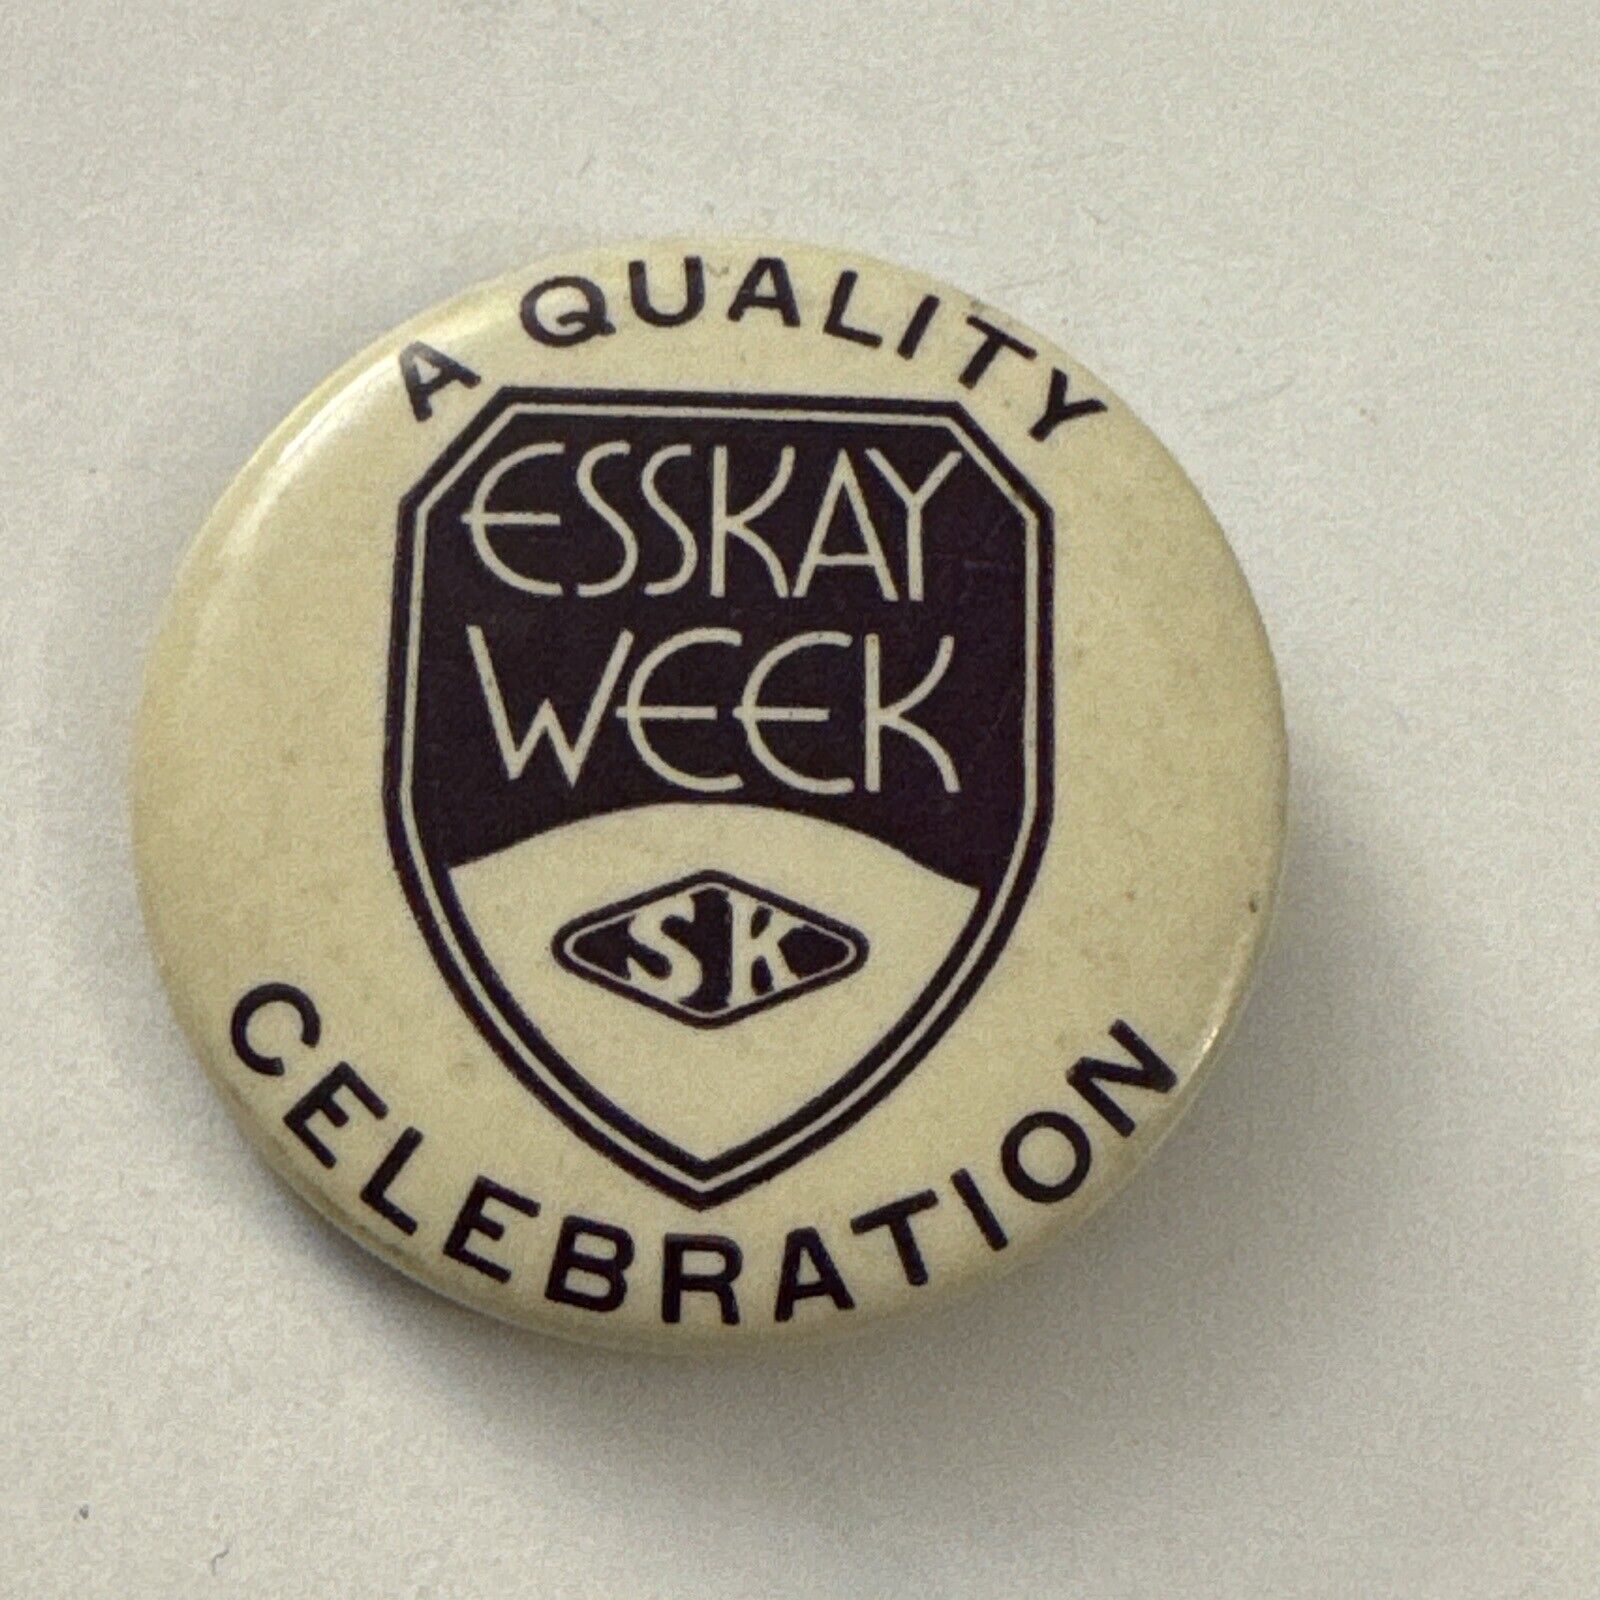 Vintage Esskay Week SK A Quality Celebration Pin Button AV5B